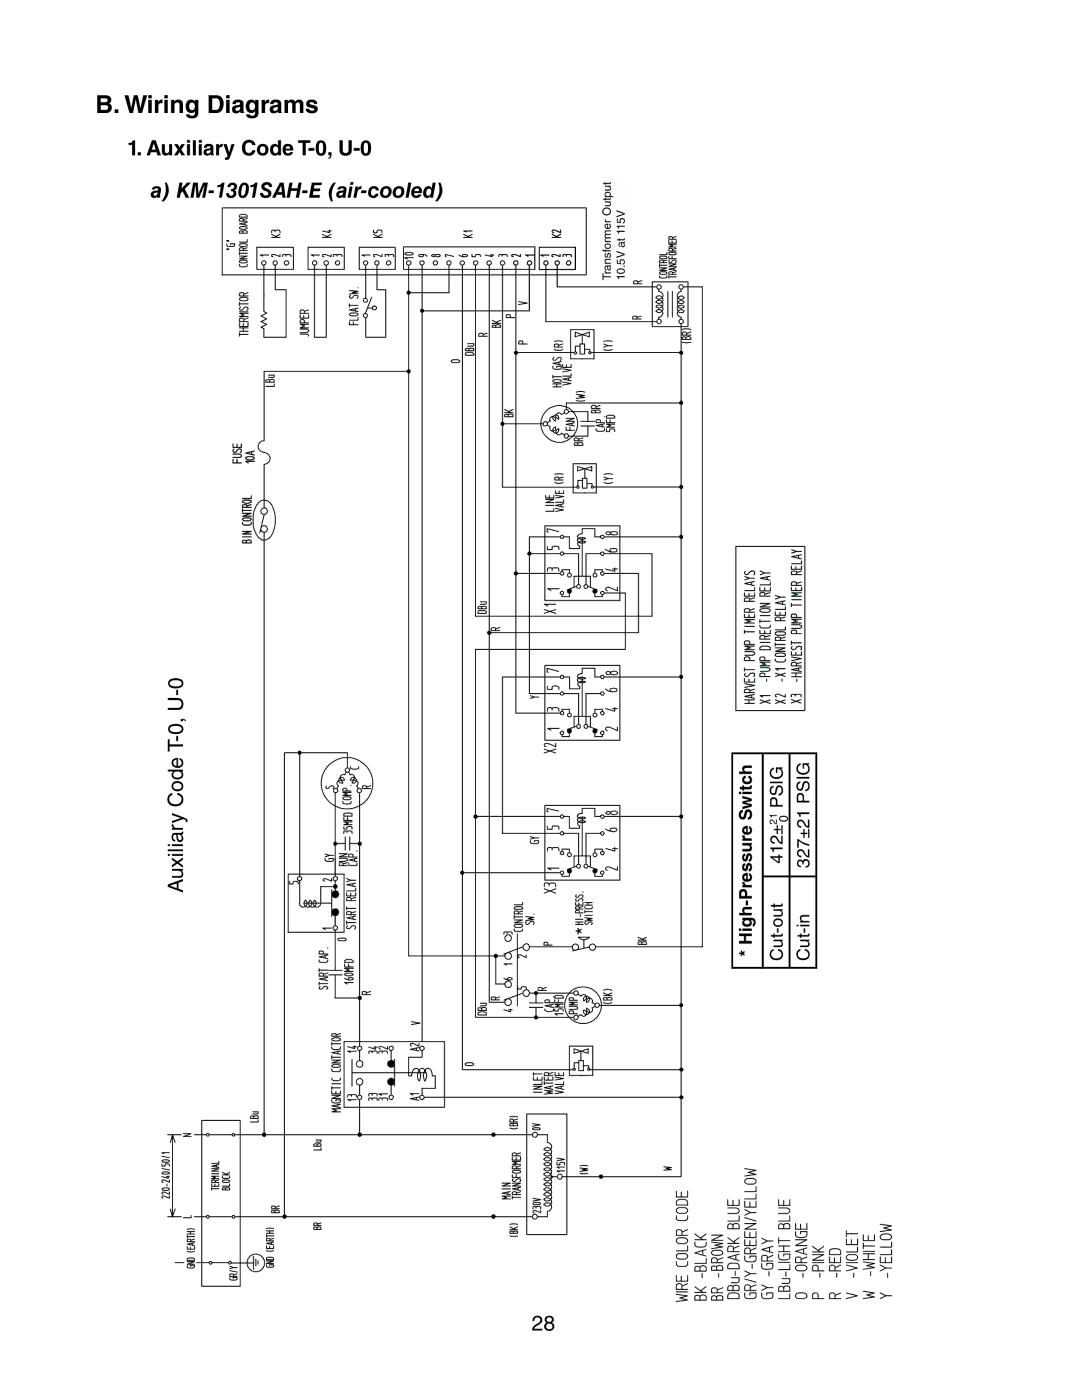 Hoshizaki KM-1301SRH-E Wiring Diagrams, Auxiliary Code T-0, U-0, KM-1301SAH-E air-cooled, U-0 Auxiliary Code 